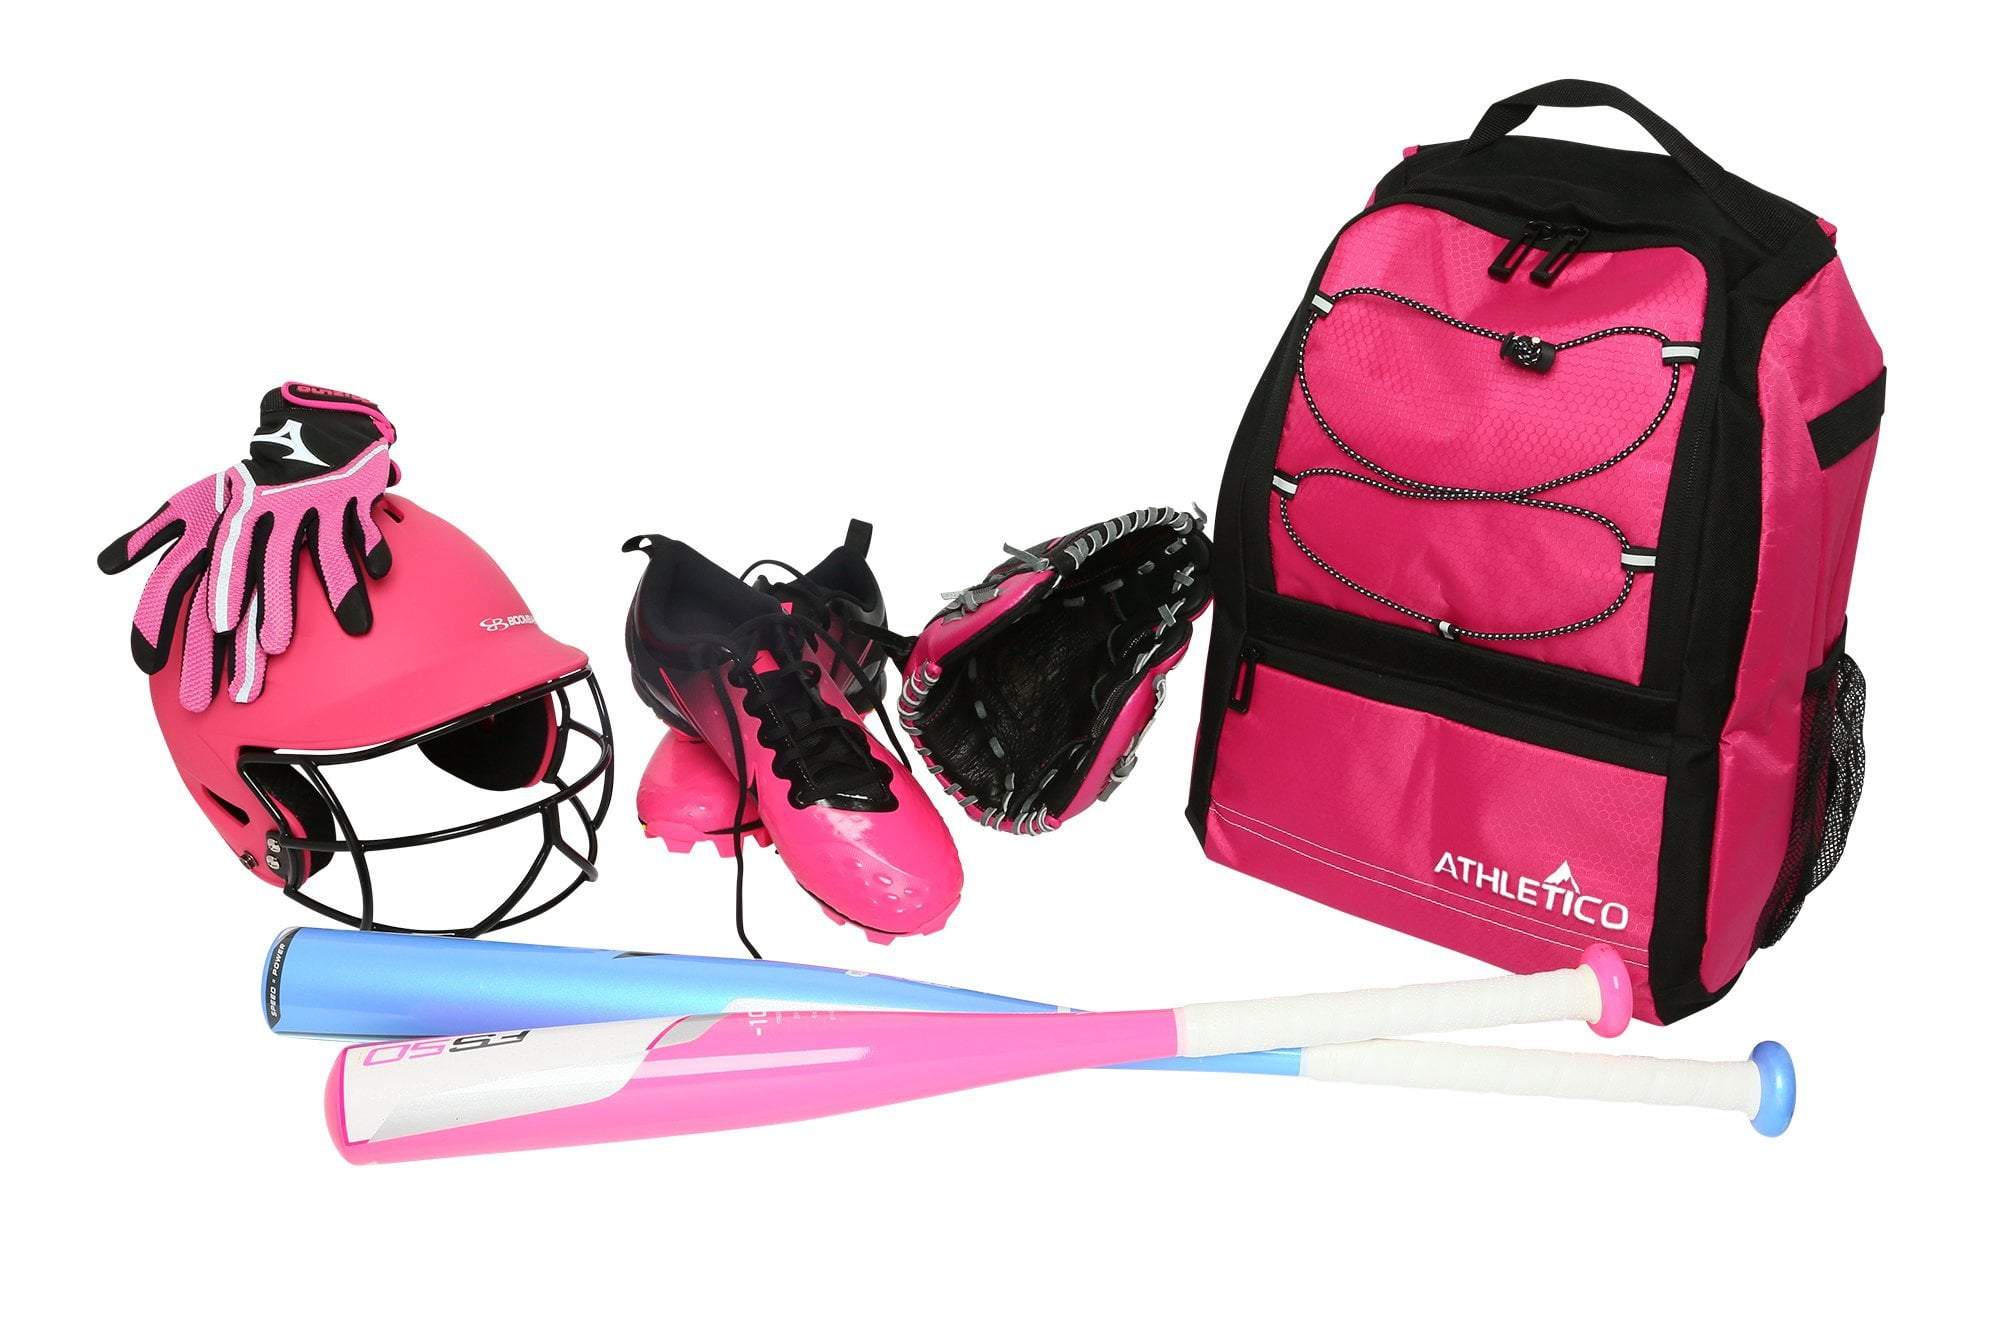 Athletico Advantage Baseball Bag - Baseball Backpack with External Helmet Holder for Baseball, T-Ball & Softball Equipment & Gear for Youth An